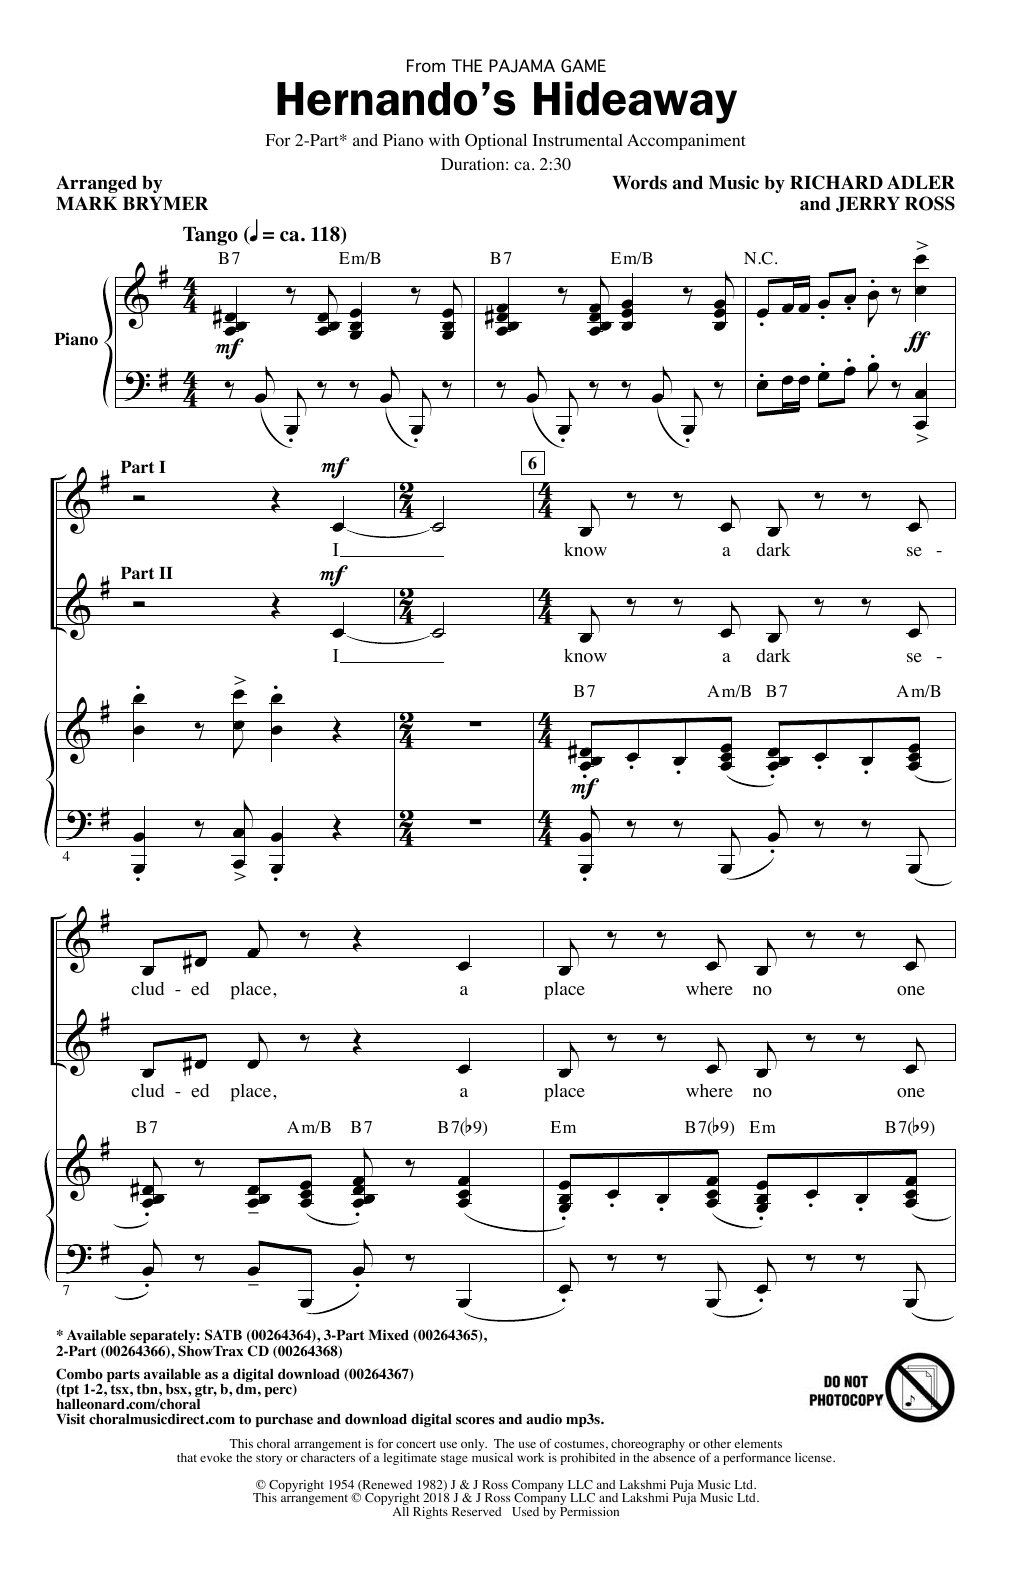 Richard Adler Hernando's Hideaway (arr. Mark Brymer) Sheet Music Notes & Chords for 3-Part Mixed - Download or Print PDF